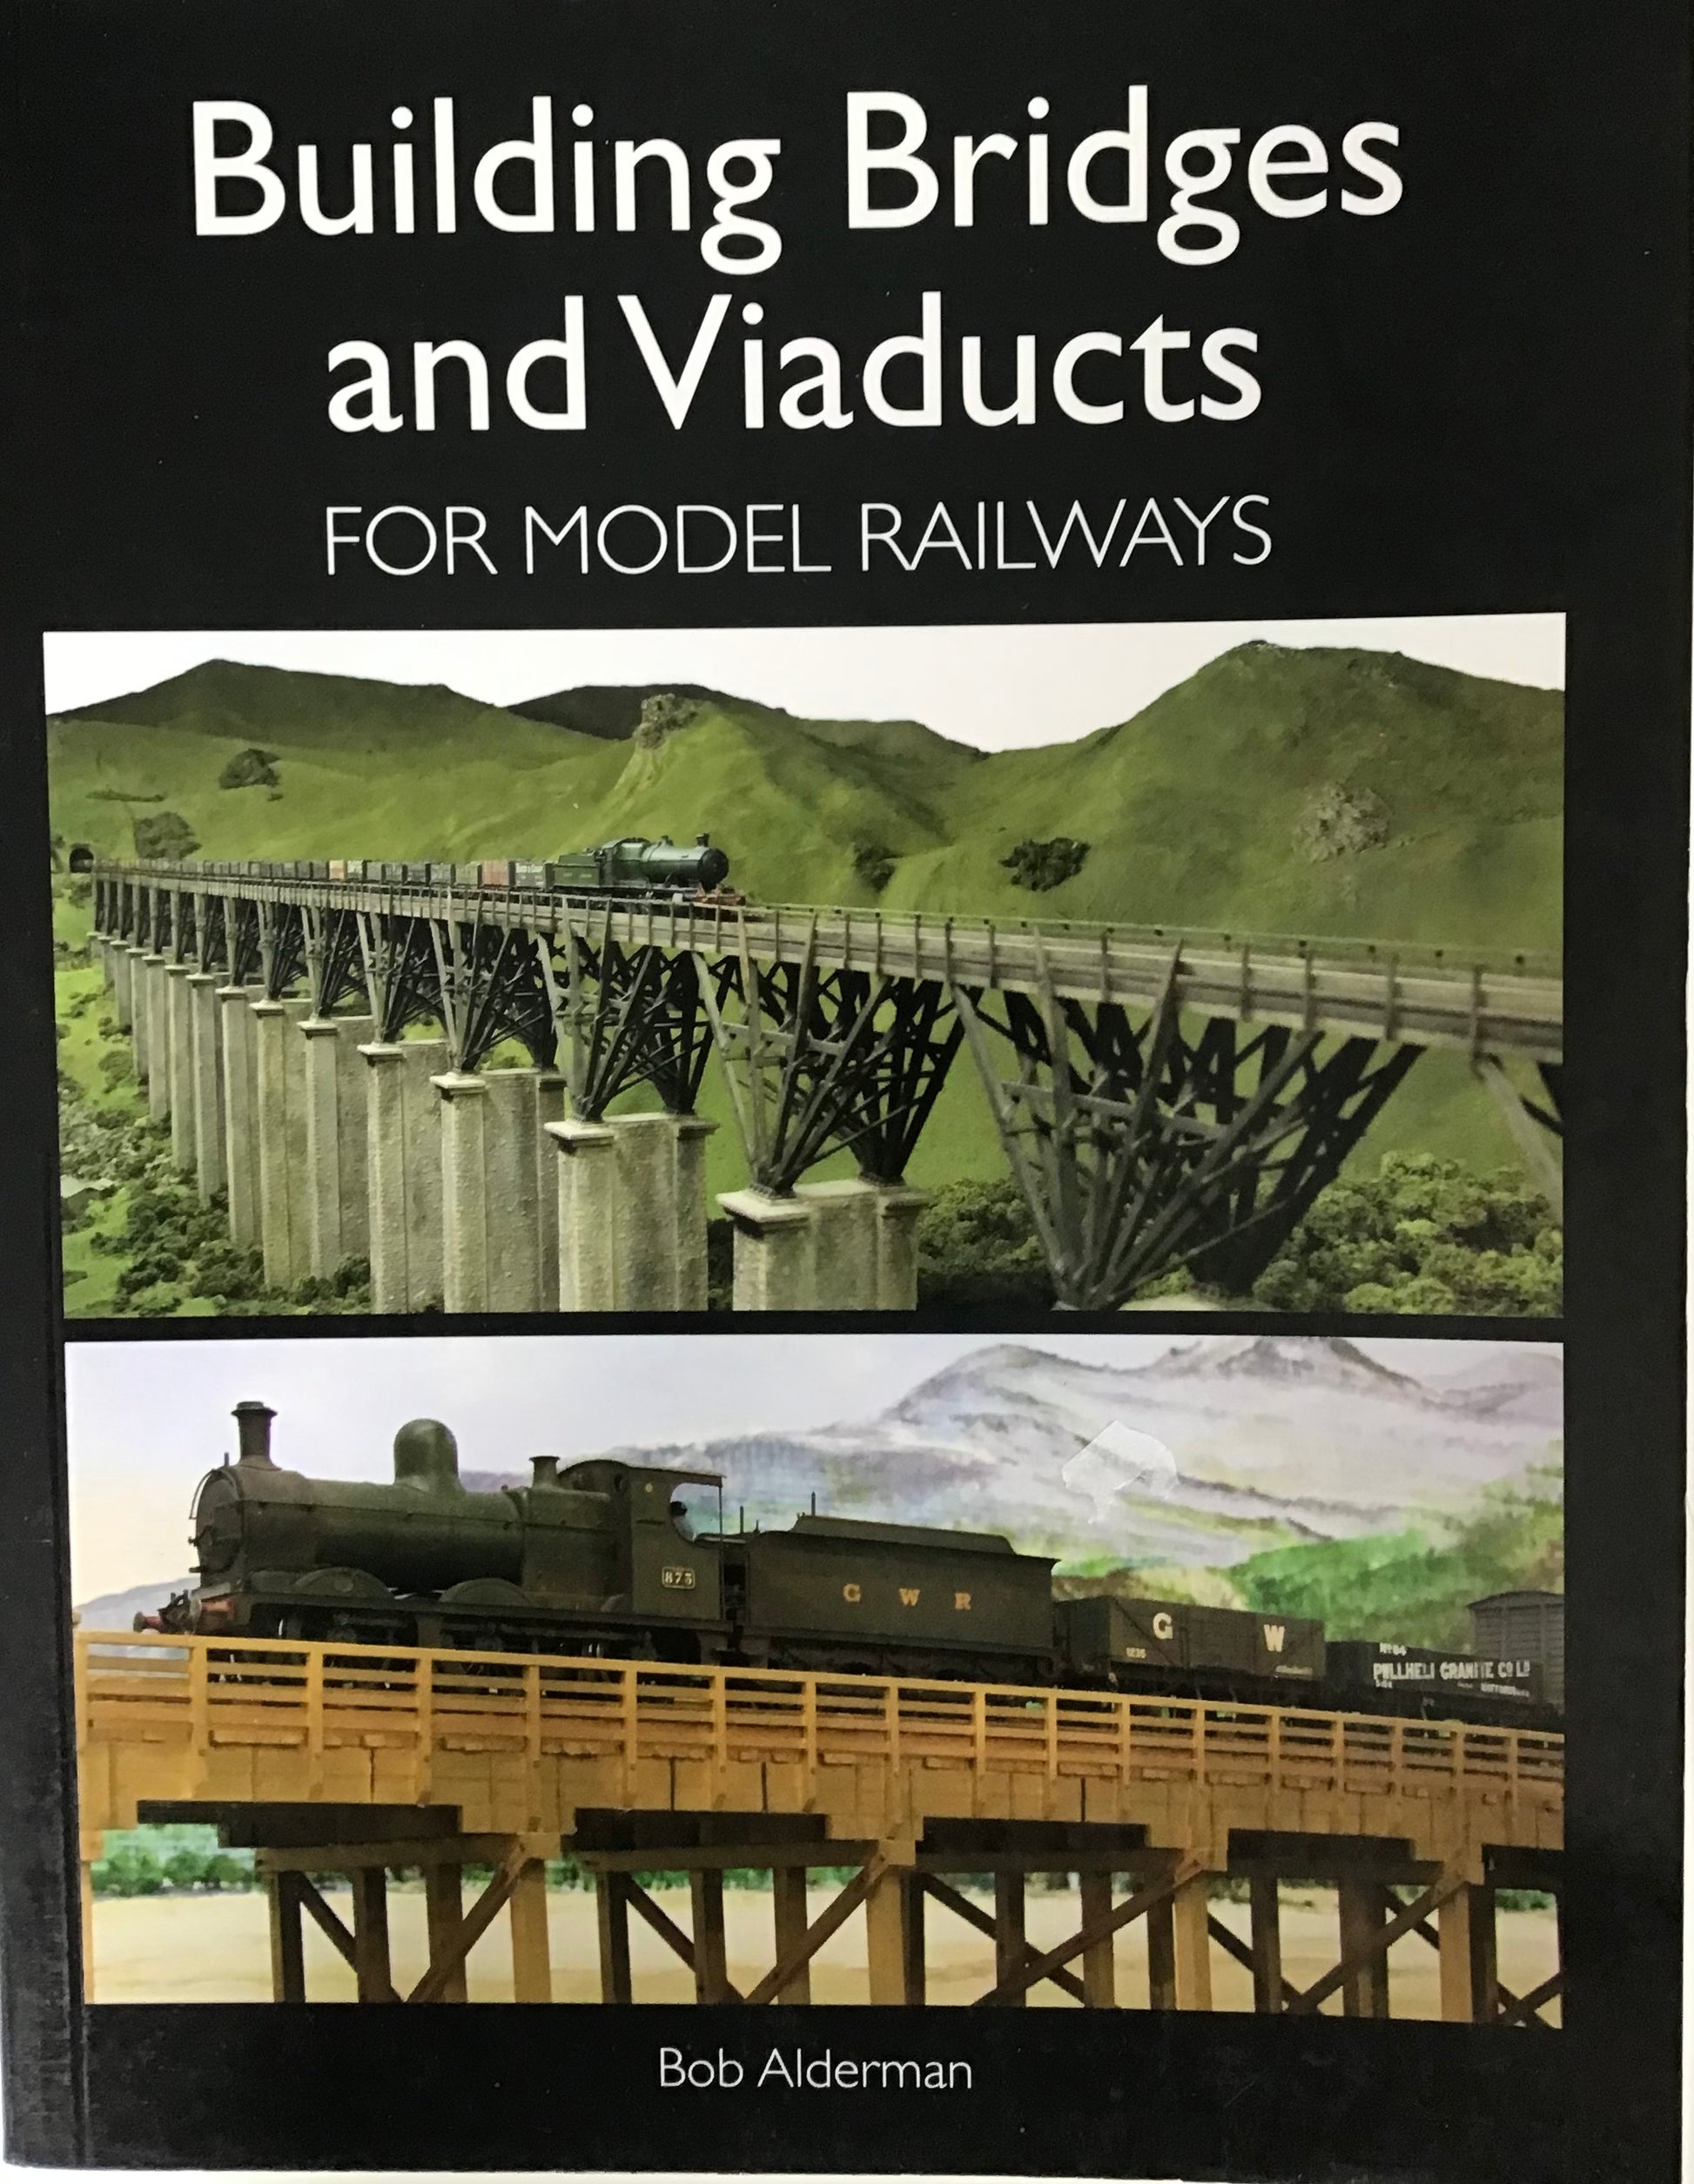 Building Bridges and Viaducts for model railways - Bob Alderman - Chester Model Centre